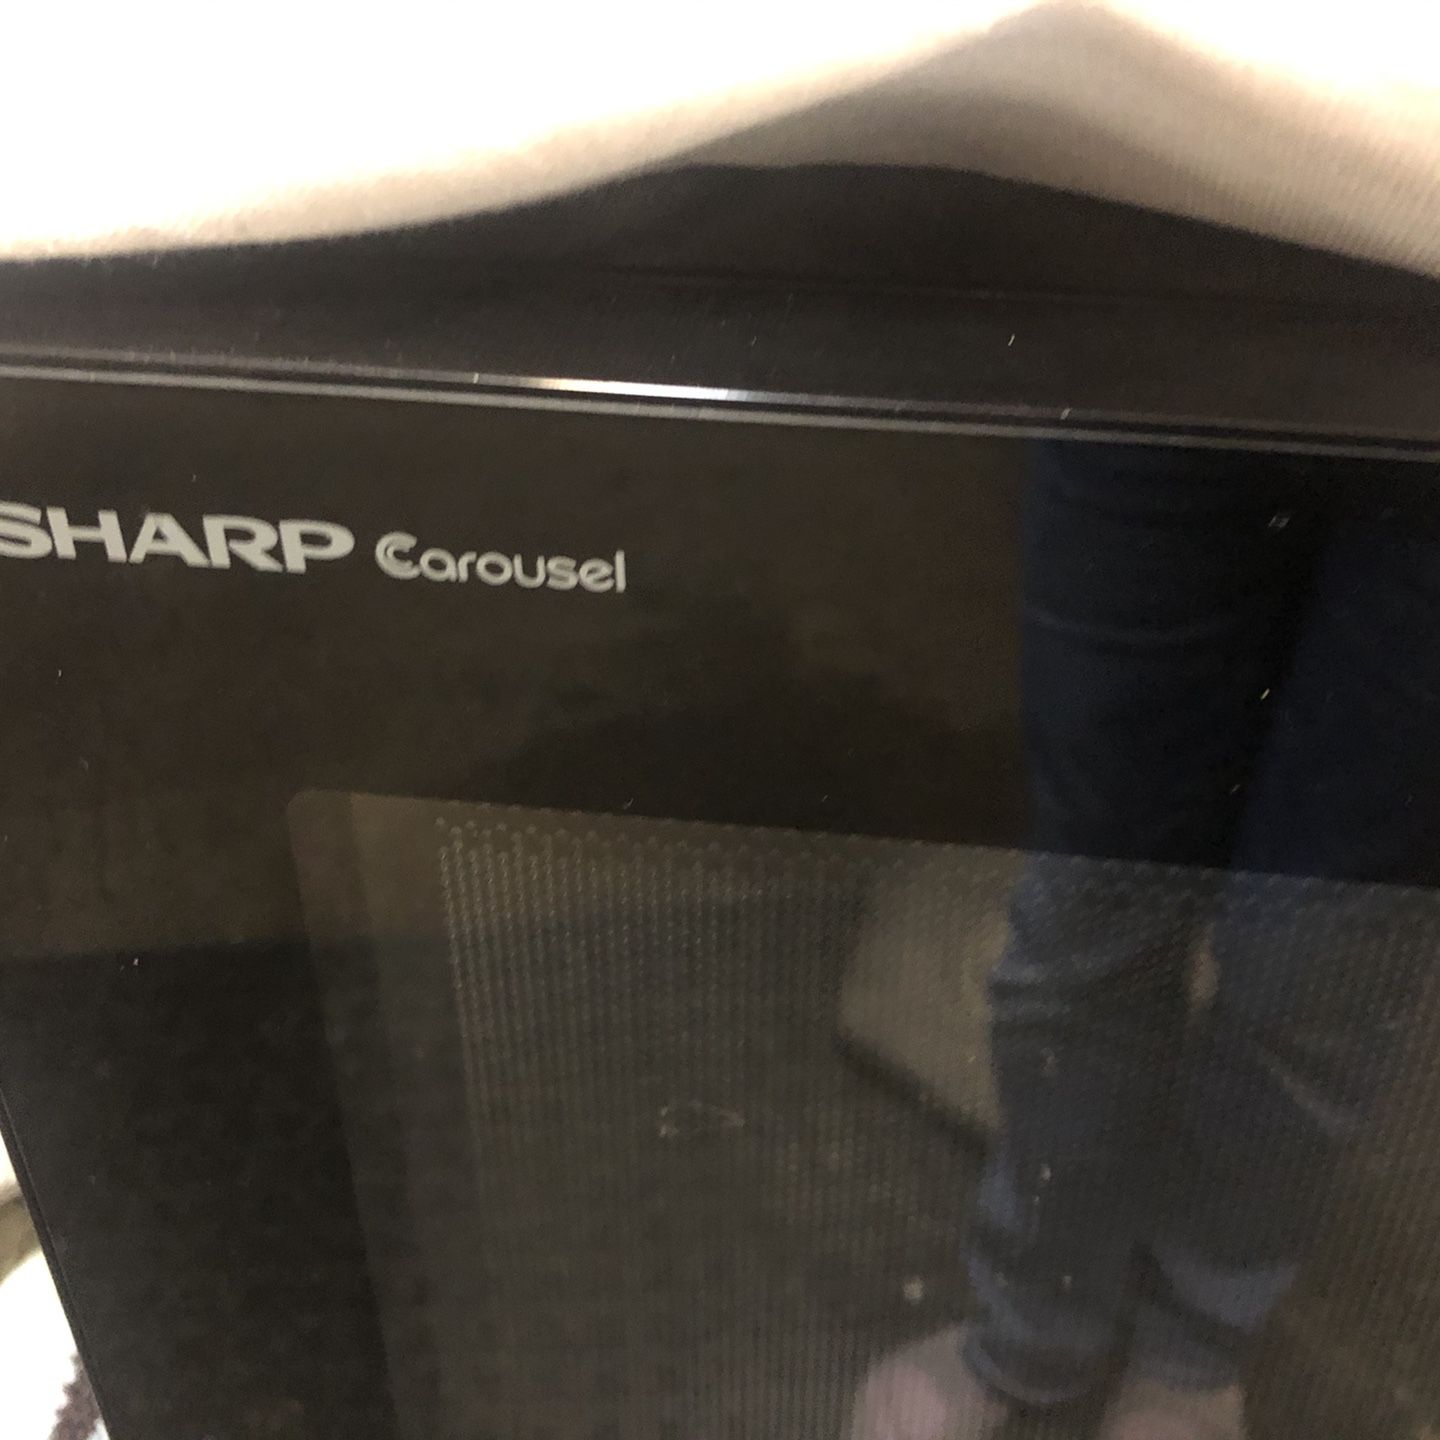 Sharp Carousel Countertop Microwave 1.1 Cu Ft